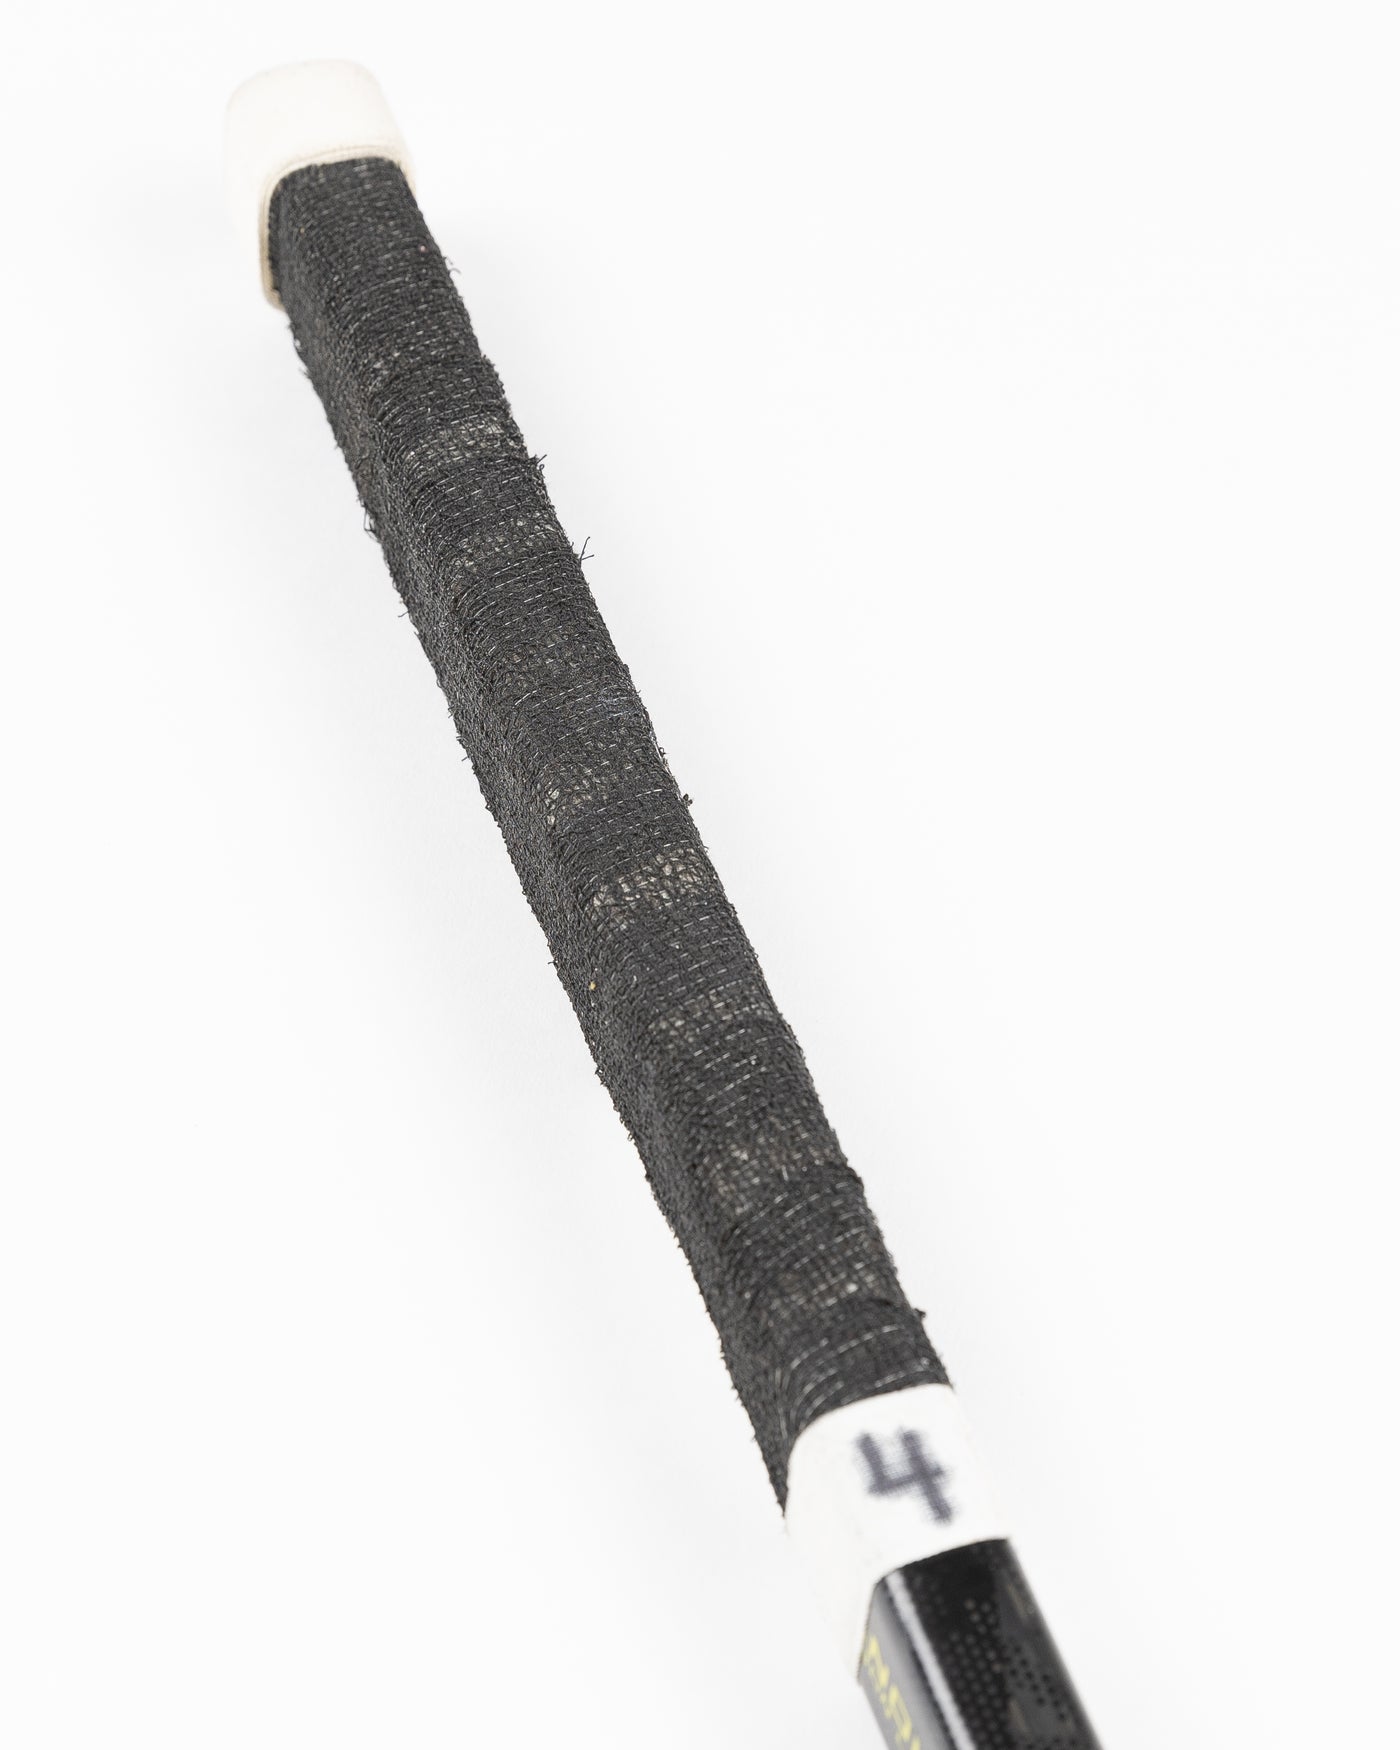 signed and game used Chicago Blackhawks Seth Jones hockey stick - alt detail lay flat